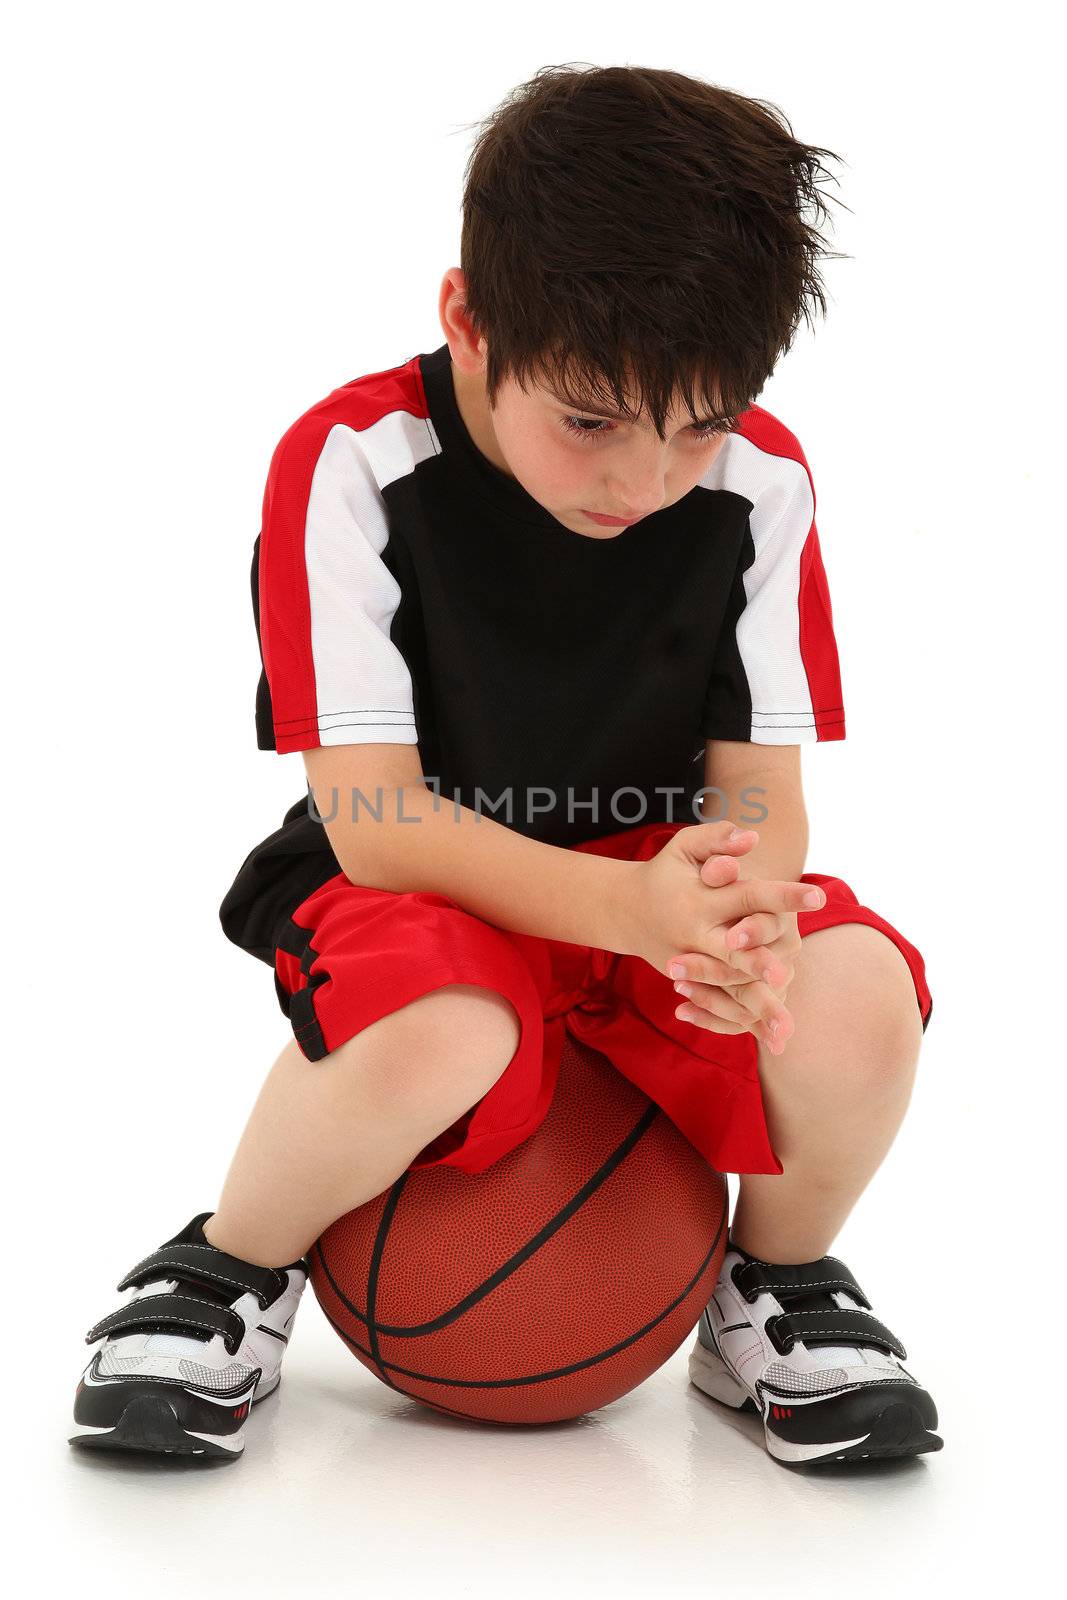 Sad Boy Lost Basketball Game by duplass